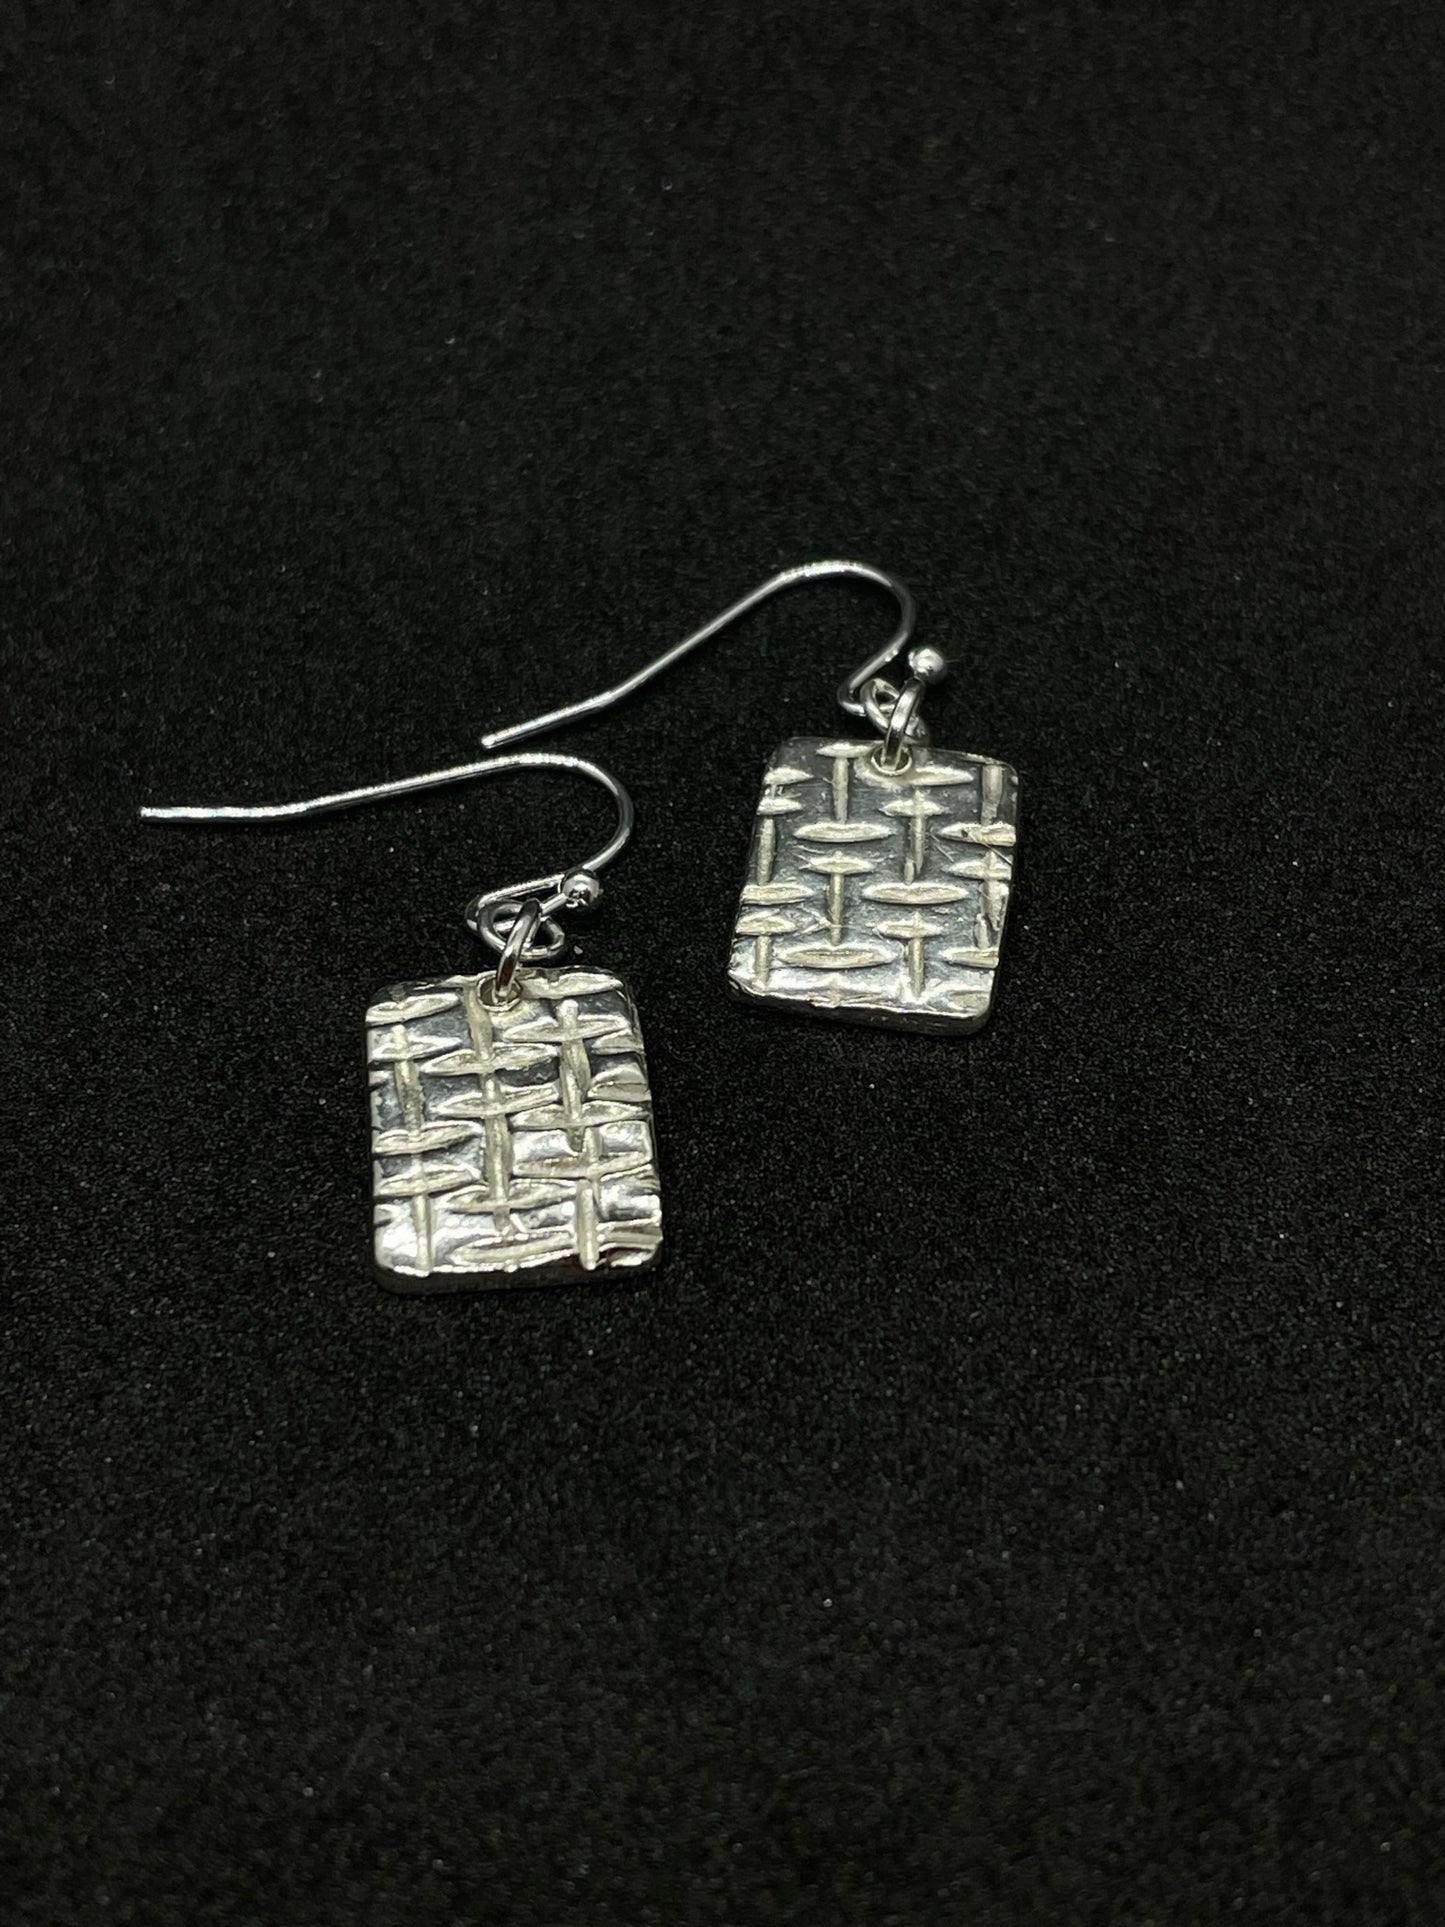 Silver earrings with mesh markings